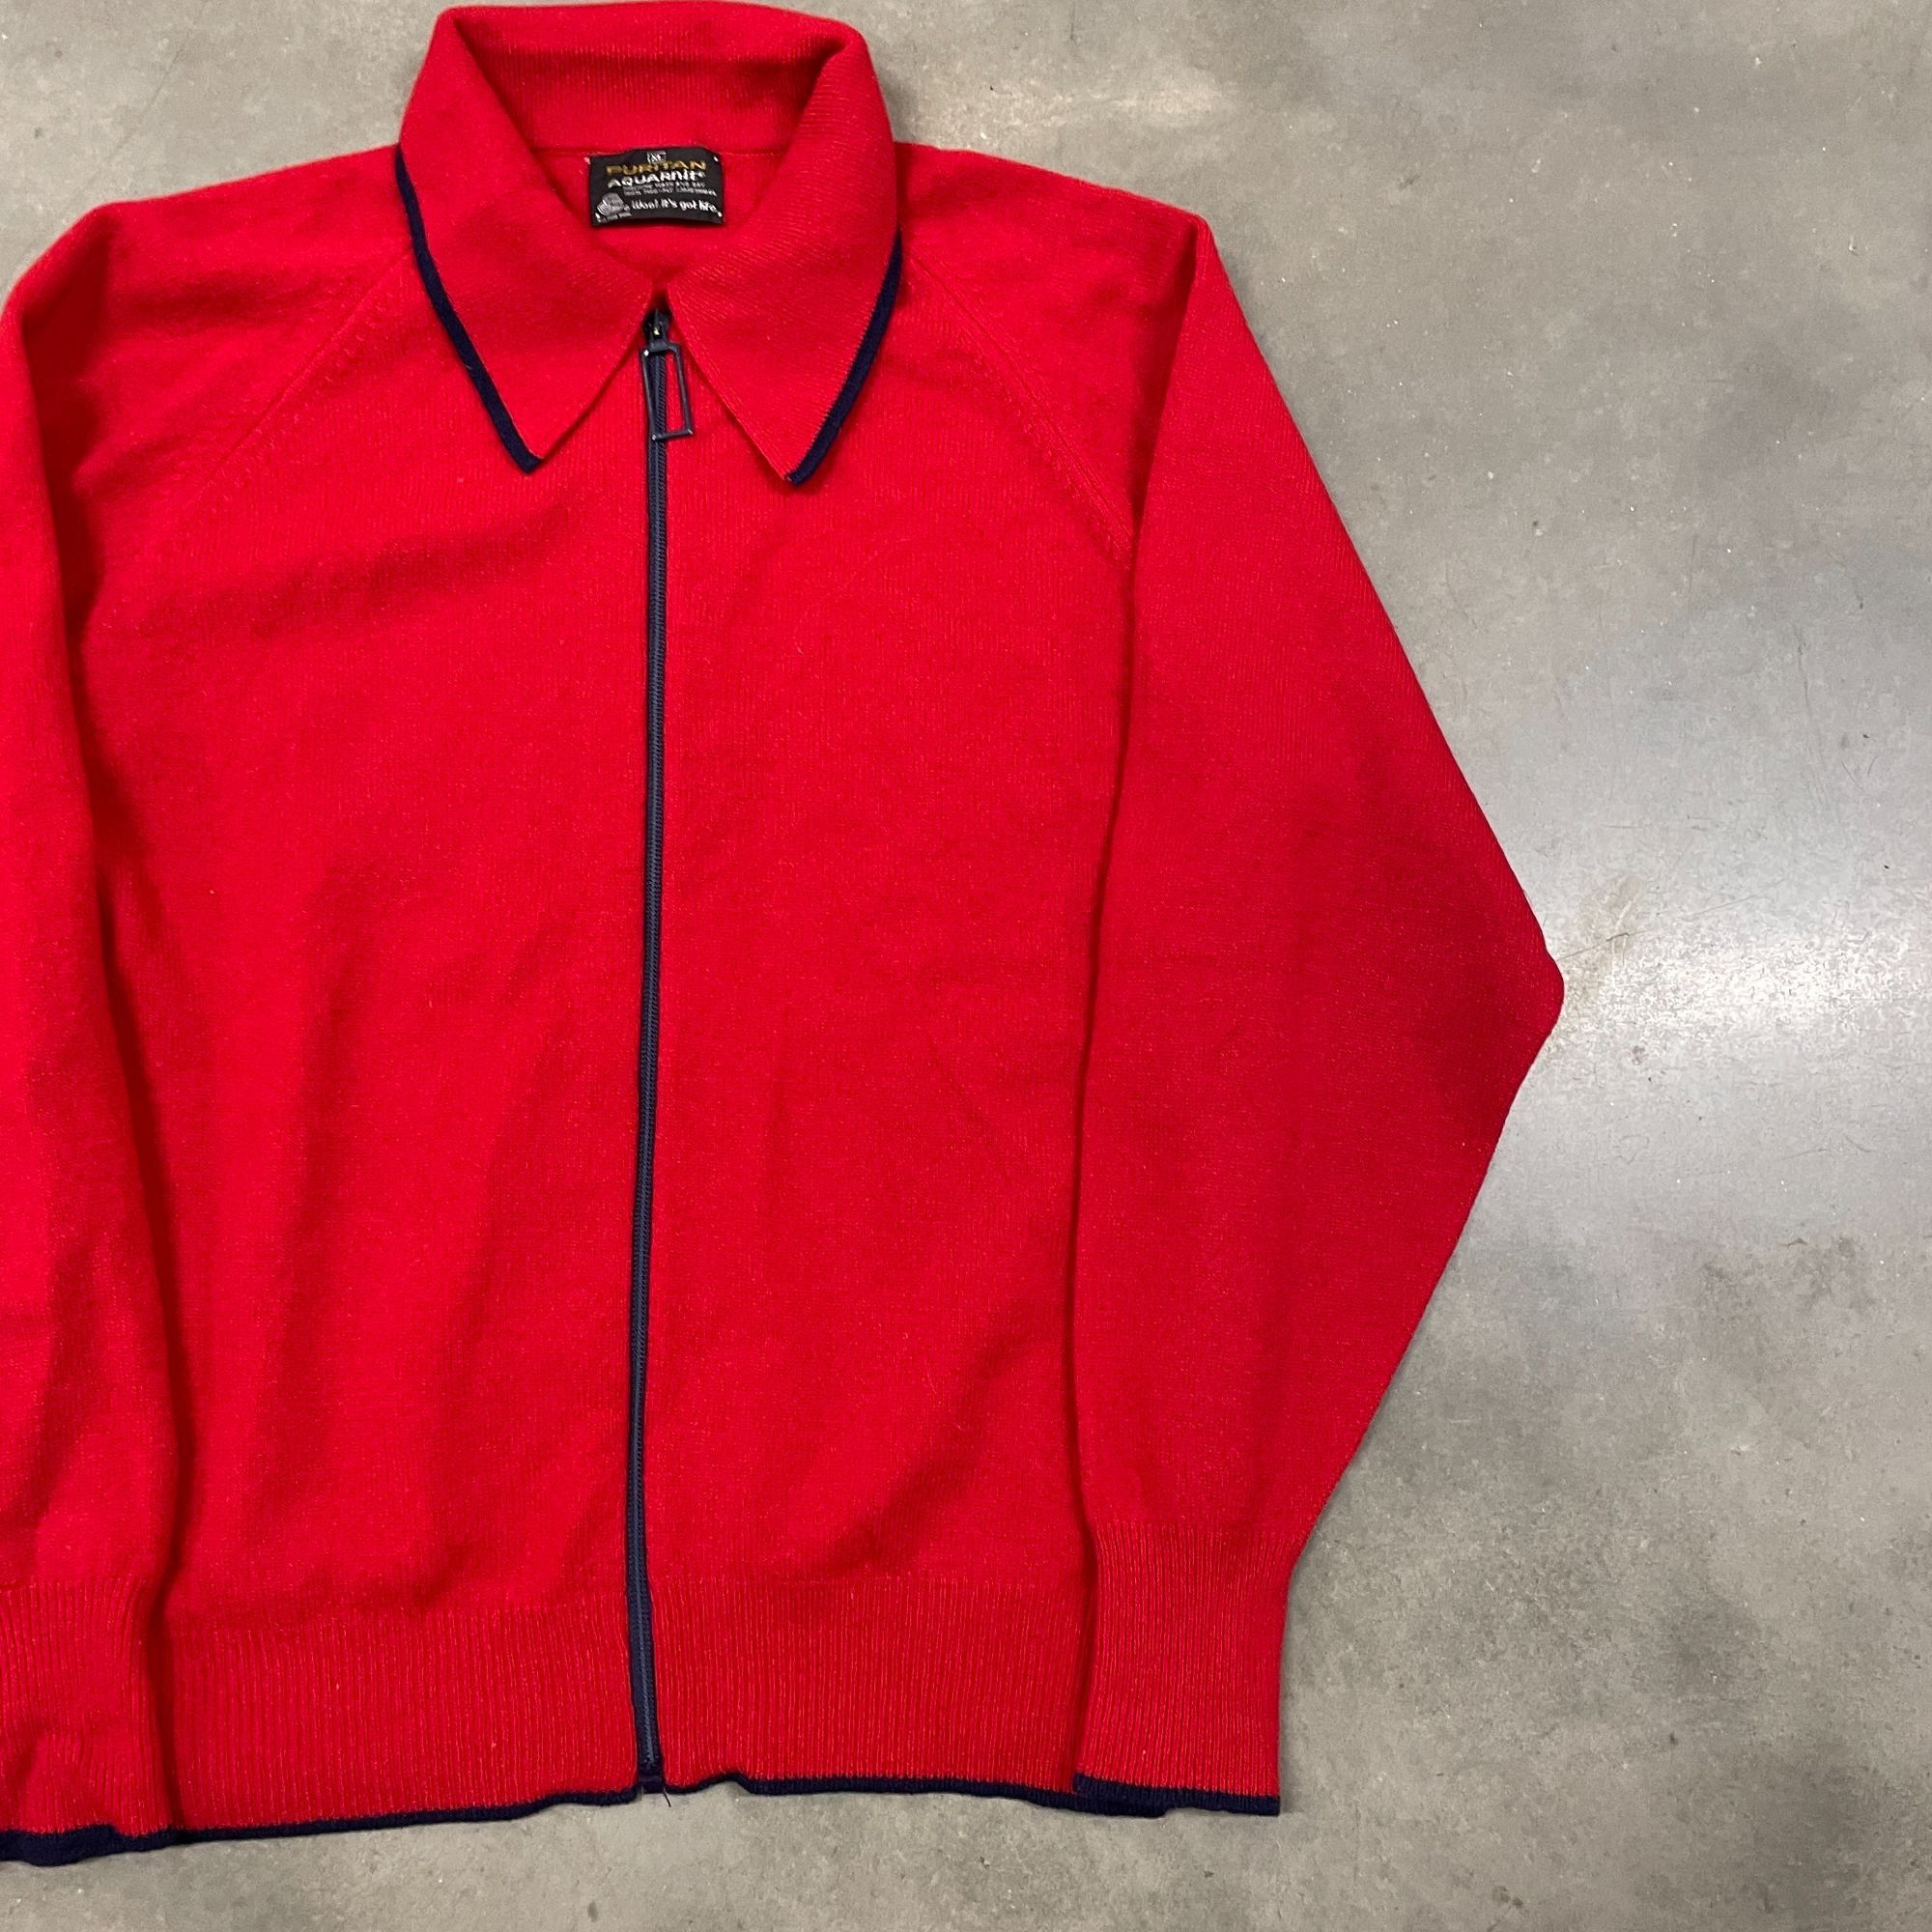 Vintage 60s VTG Red Wool Puritan Aquaknit Wool Zip Up Sweater XL Red Size US XL / EU 56 / 4 - 5 Thumbnail